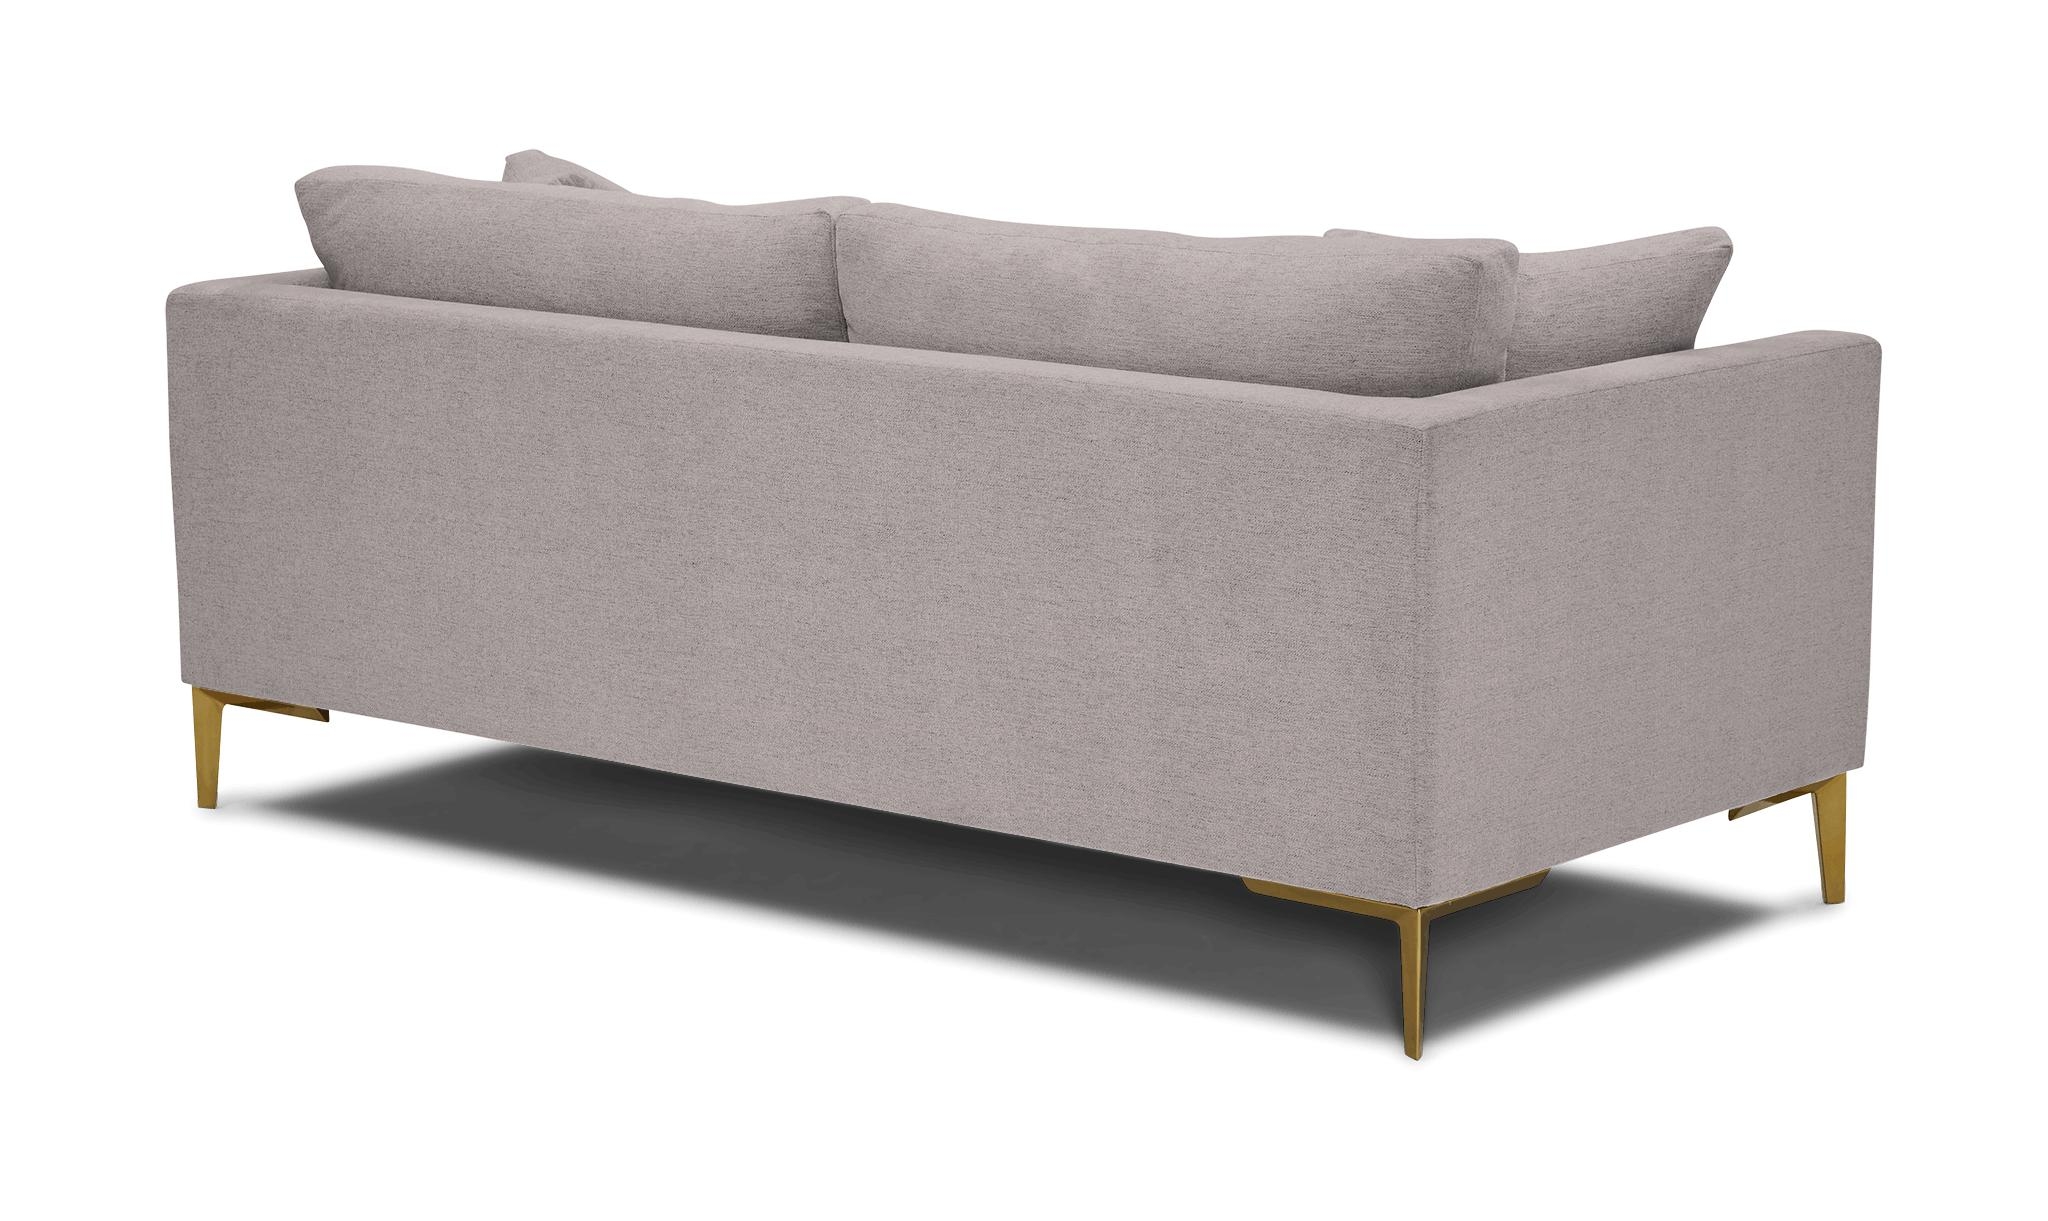 Purple Ainsley Mid Century Modern Sofa - Sunbrella Premier Wisteria - Image 3